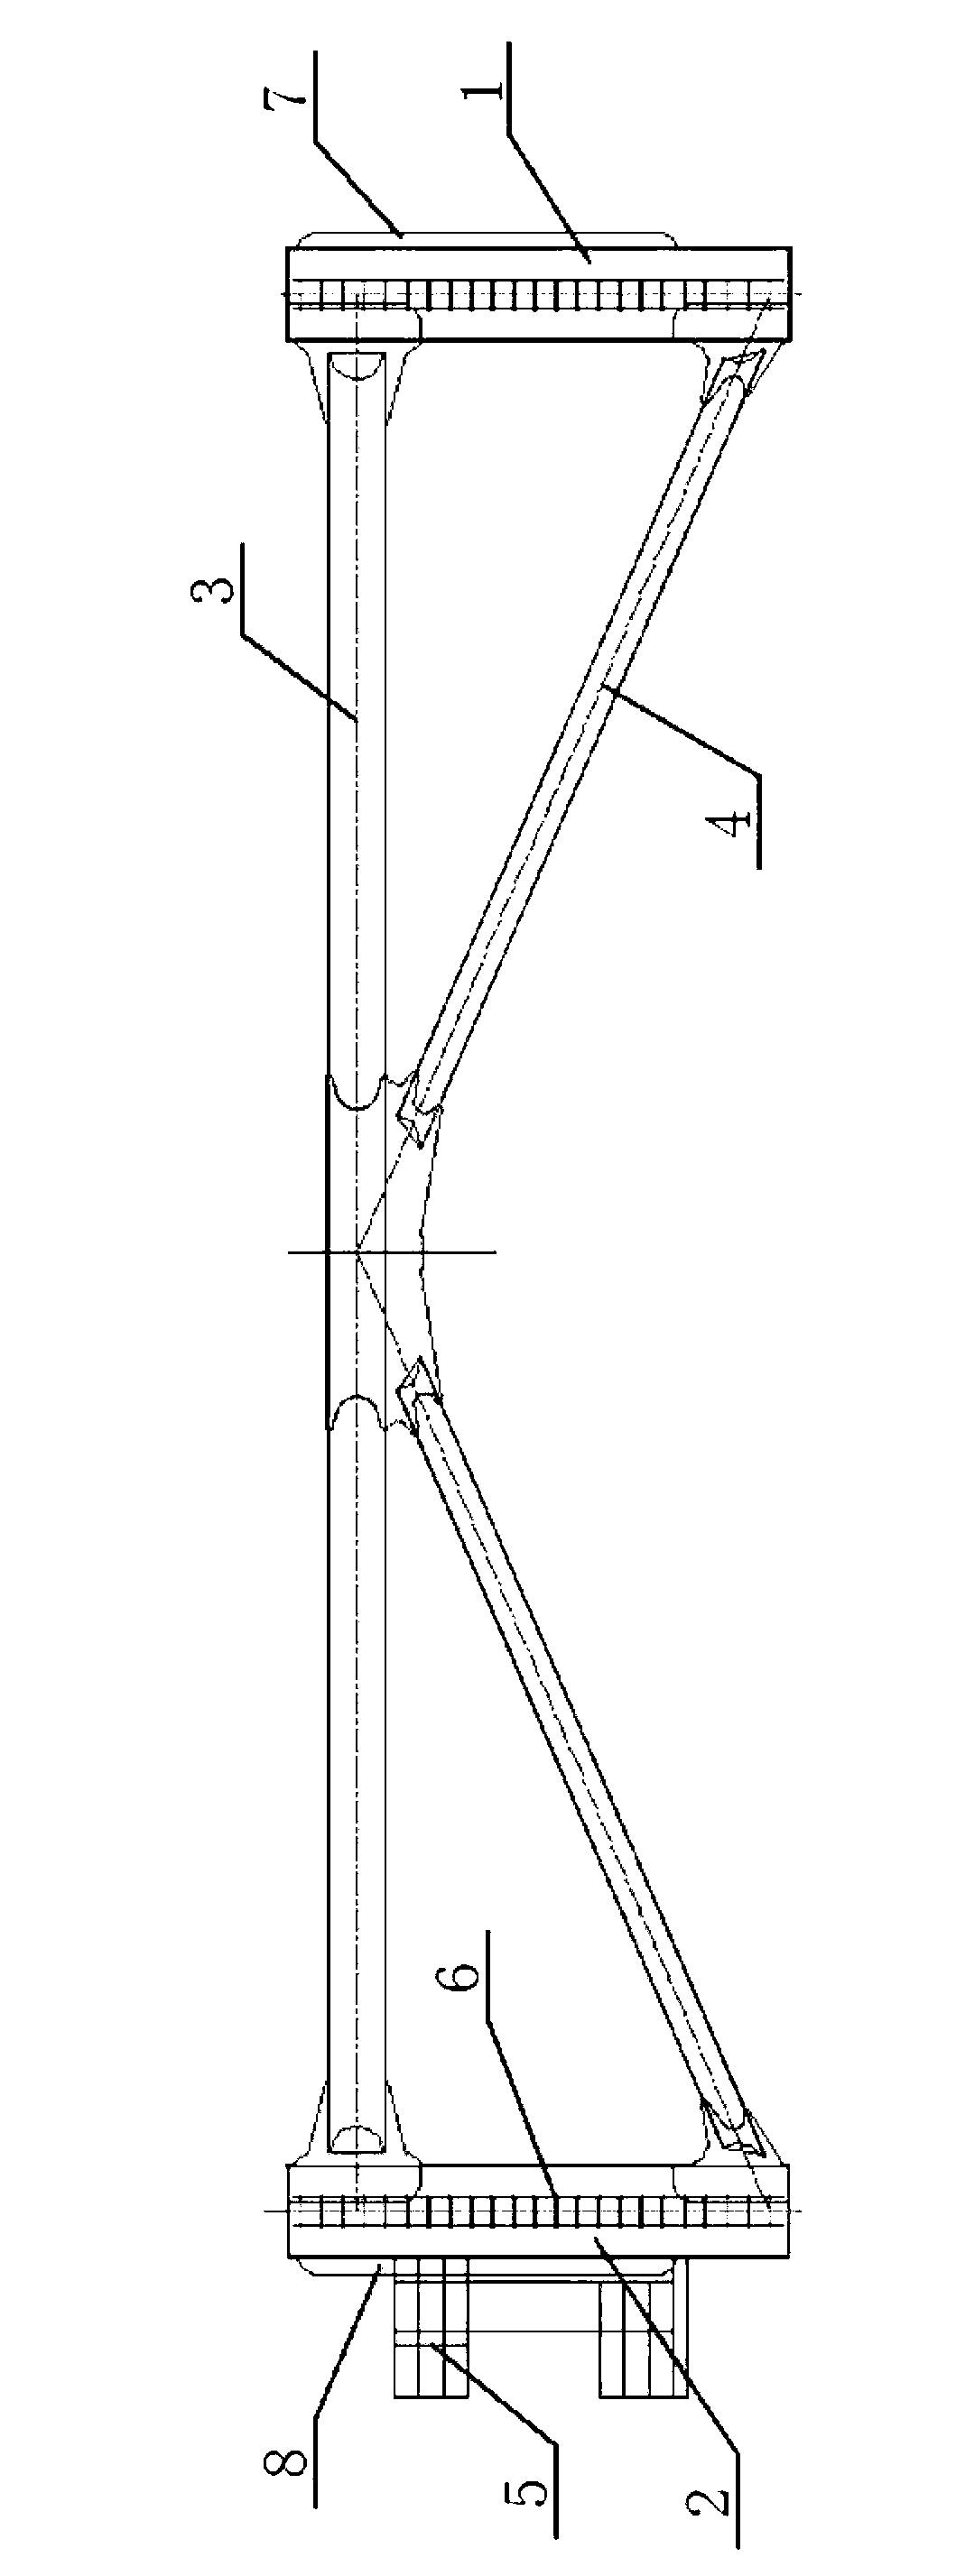 Crane heightening device and method